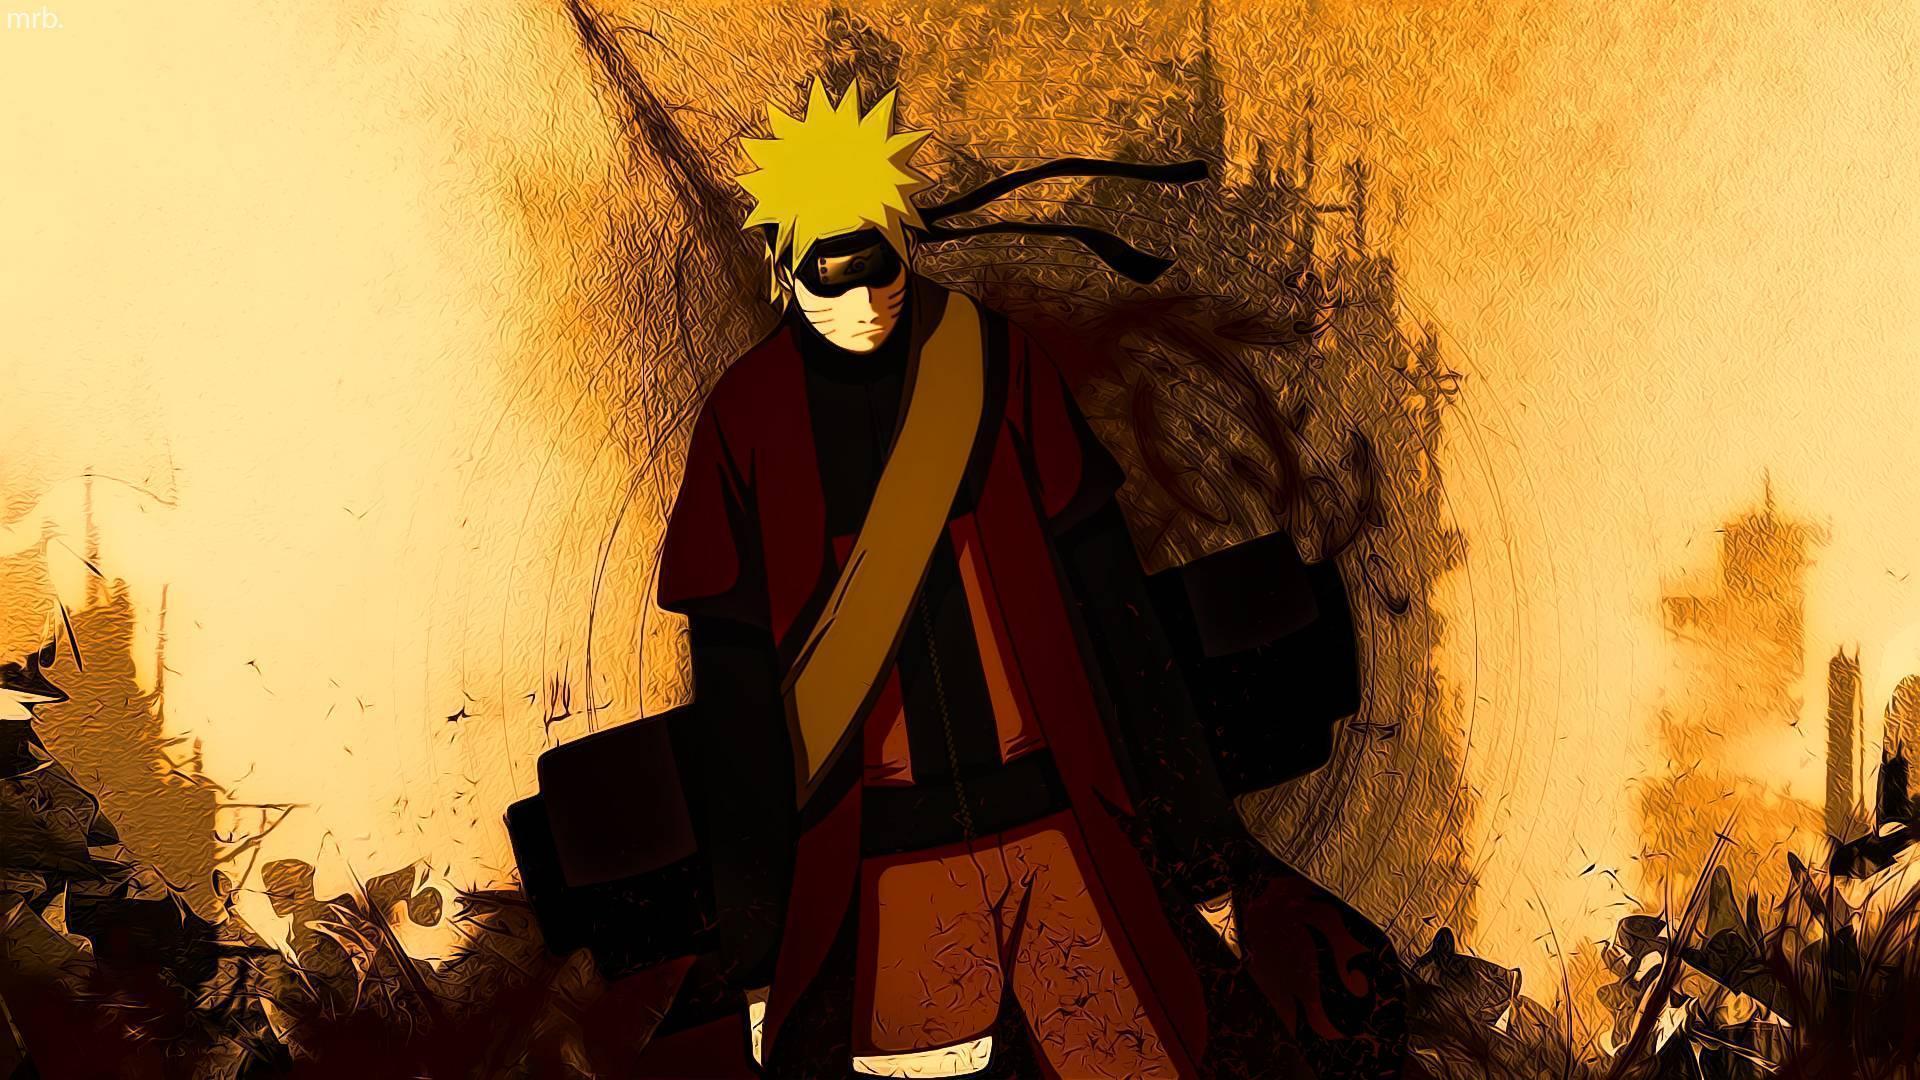 Comic Naruto Wallpaper HD. Wallpaper, Background, Image, Art